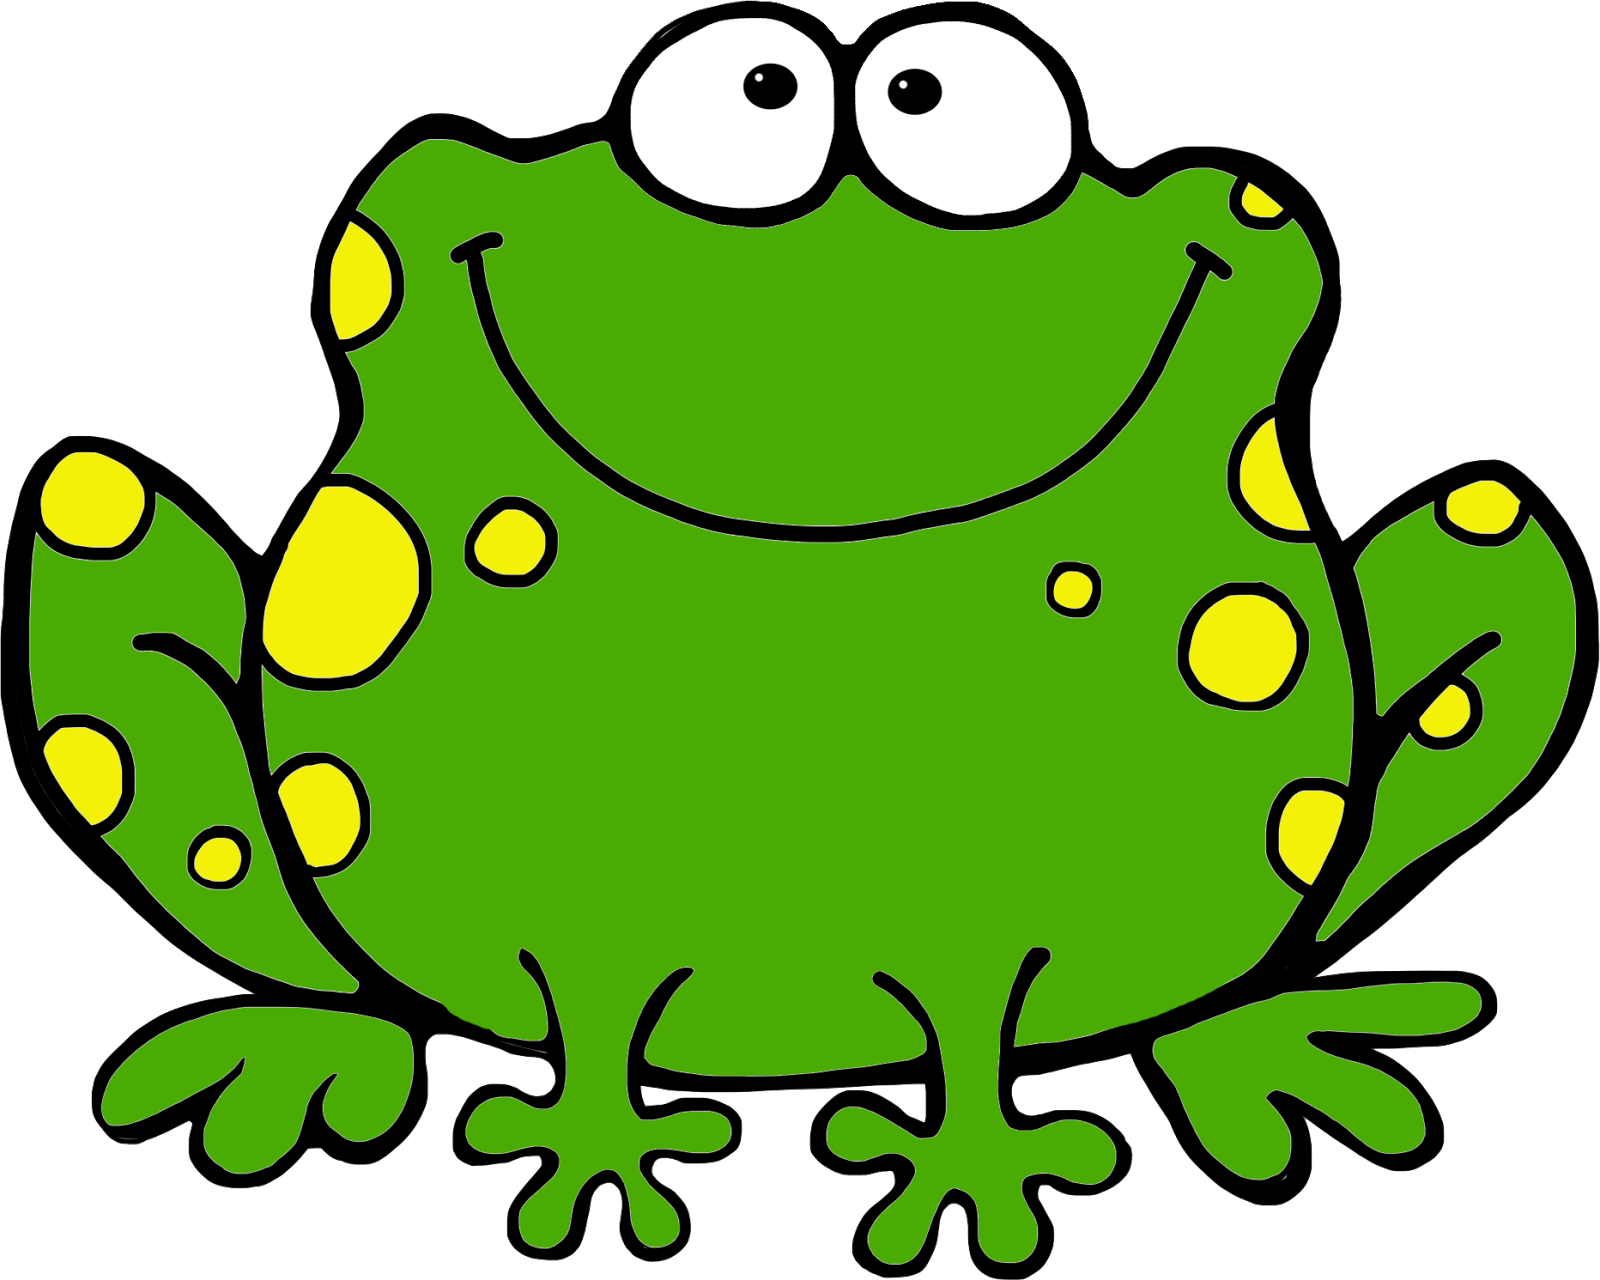 Toad clipart flies. Green frog 